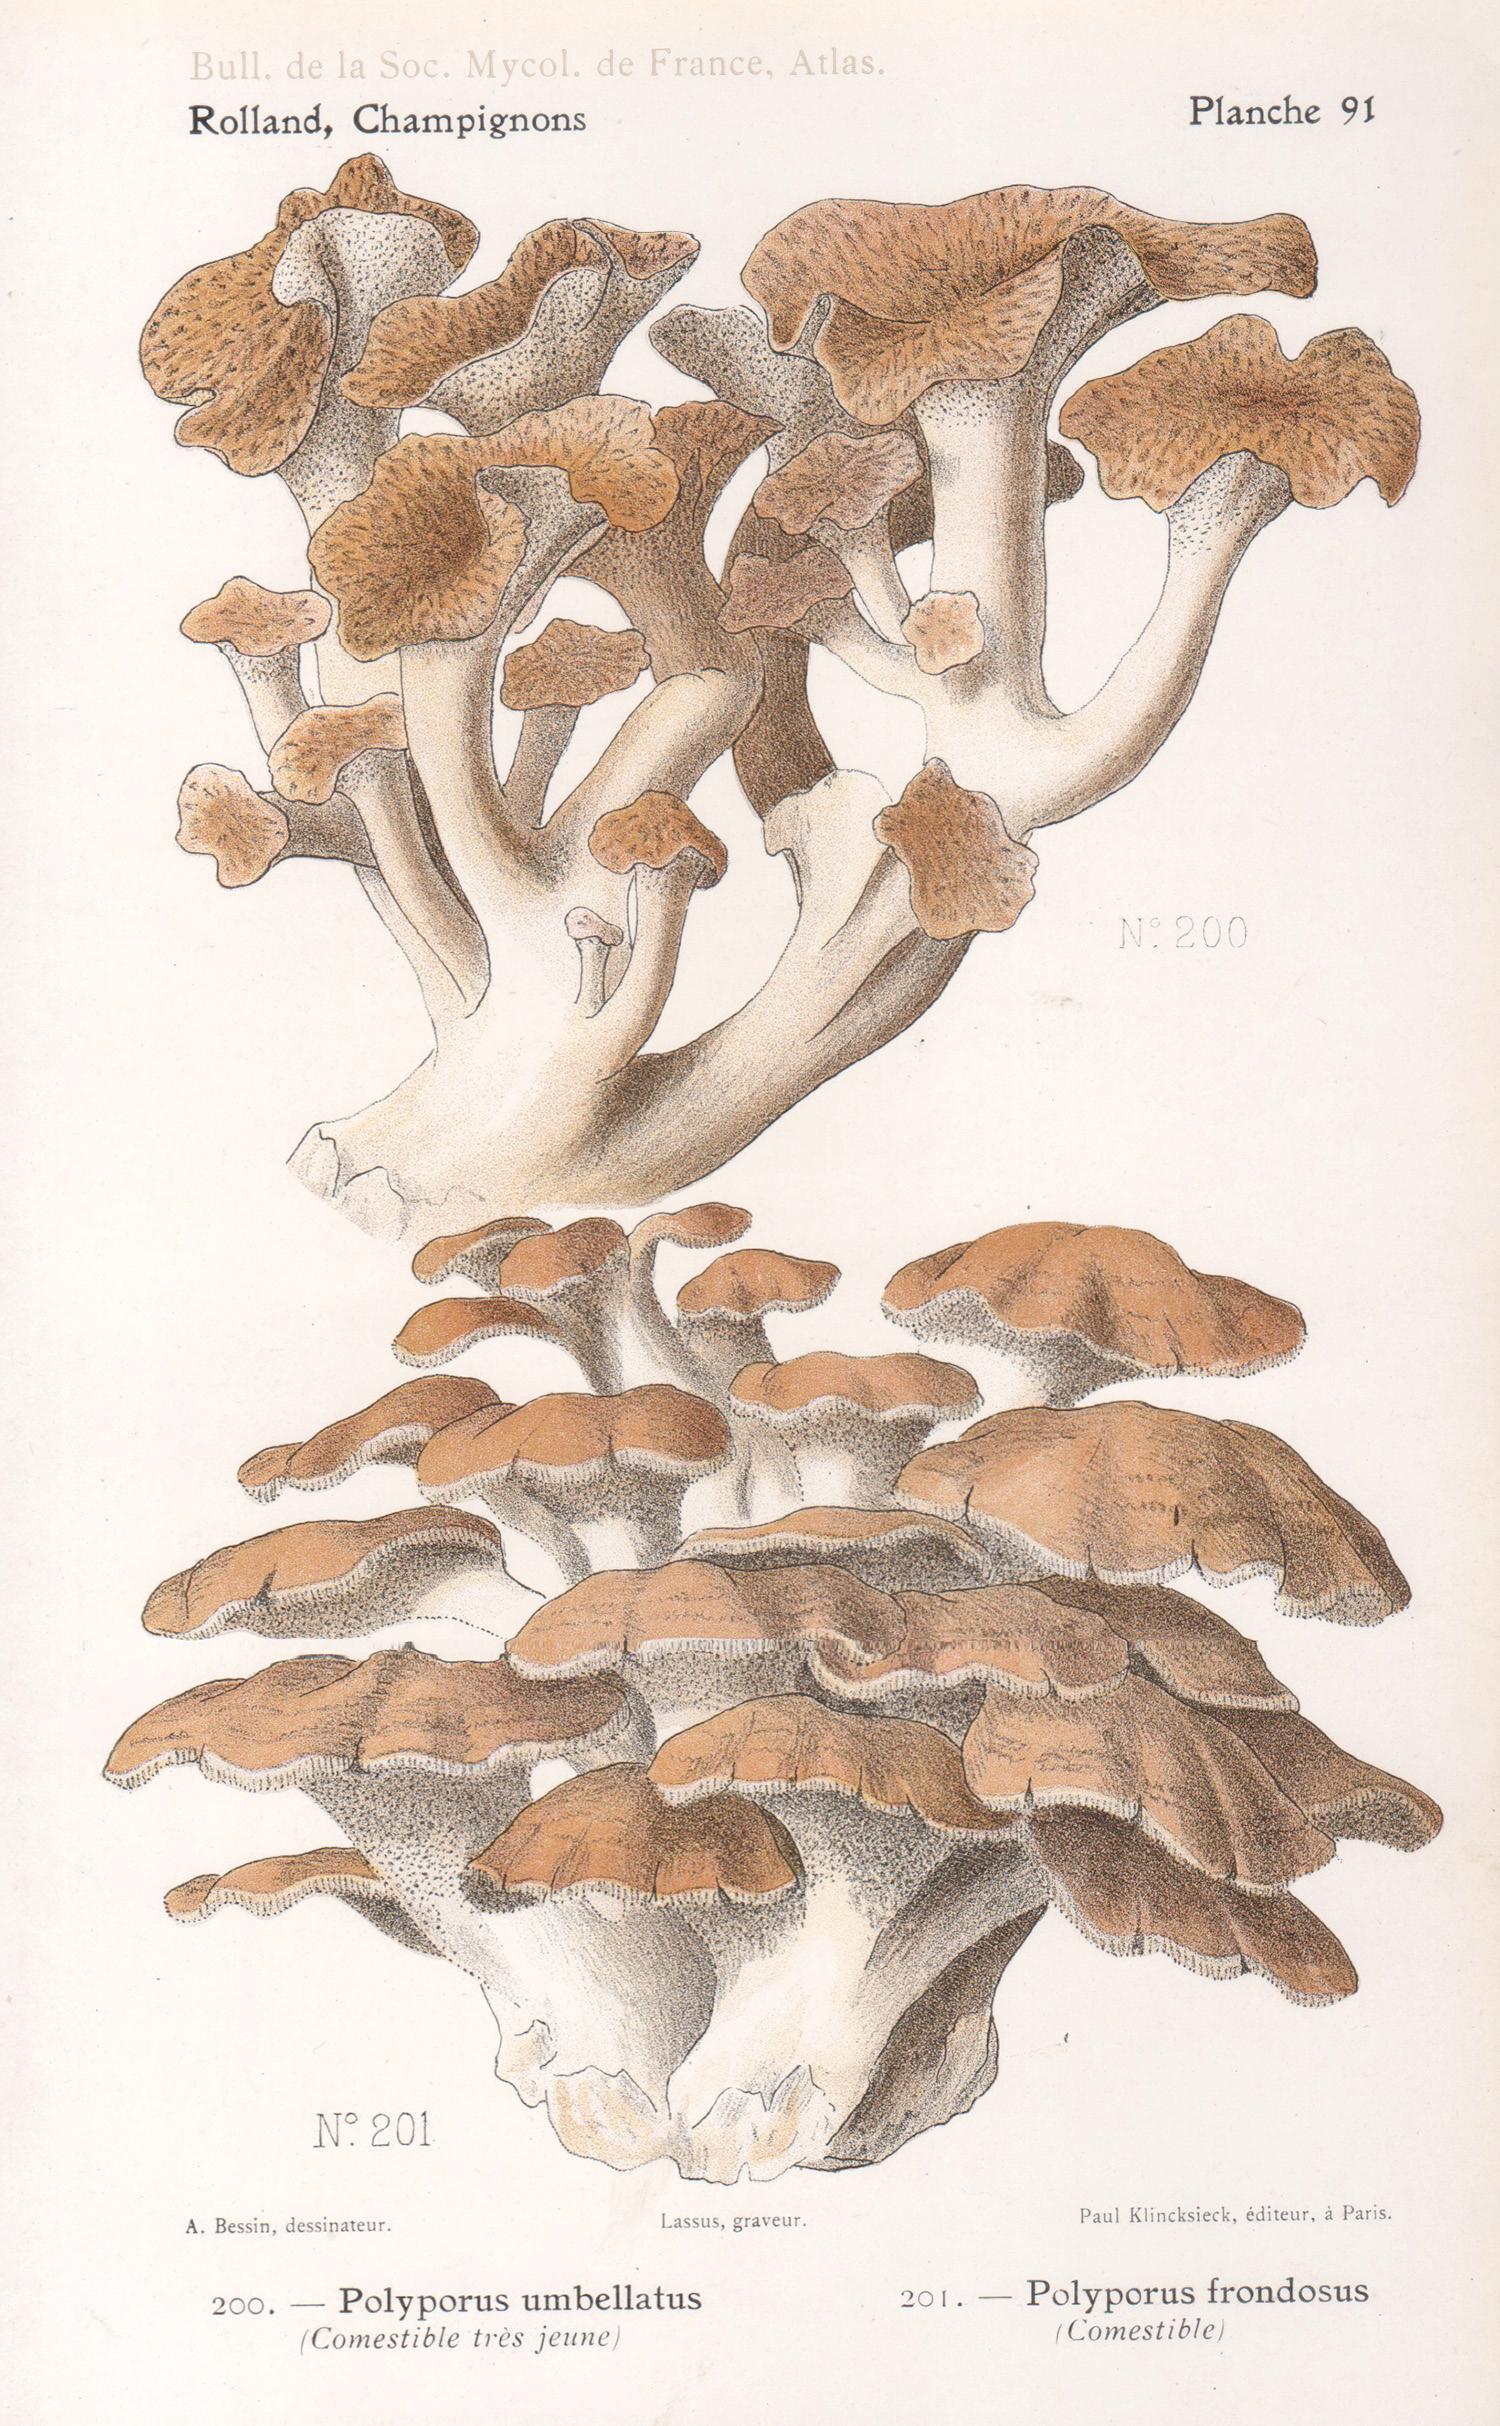 Lassus after Aimé Bessin Still-Life Print – Champignons, Französische chromolithographie antiker Pilz fungi, 1910